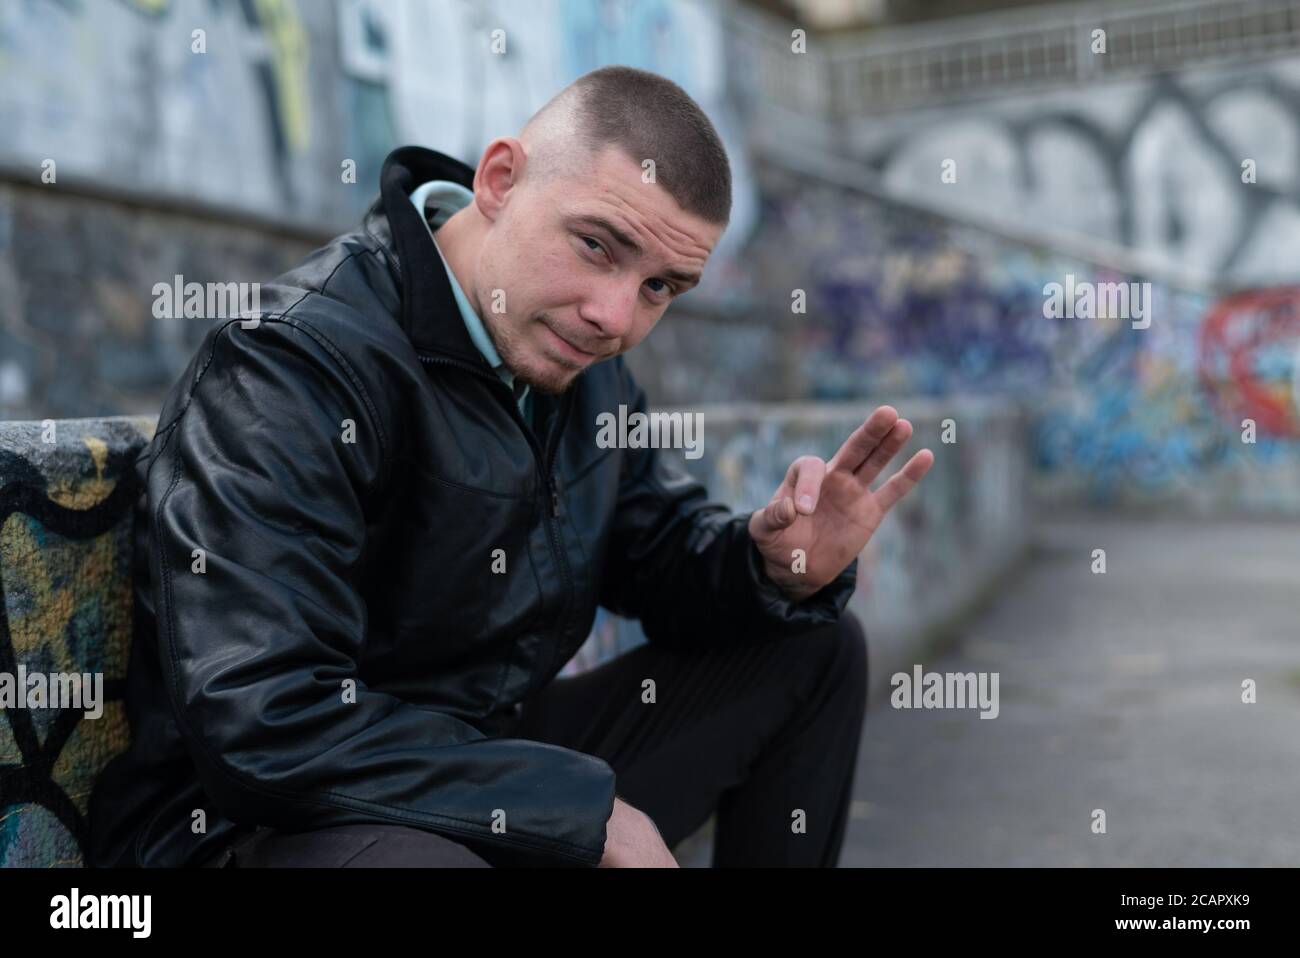 Bully criminal in black leather jacket Stock Photo